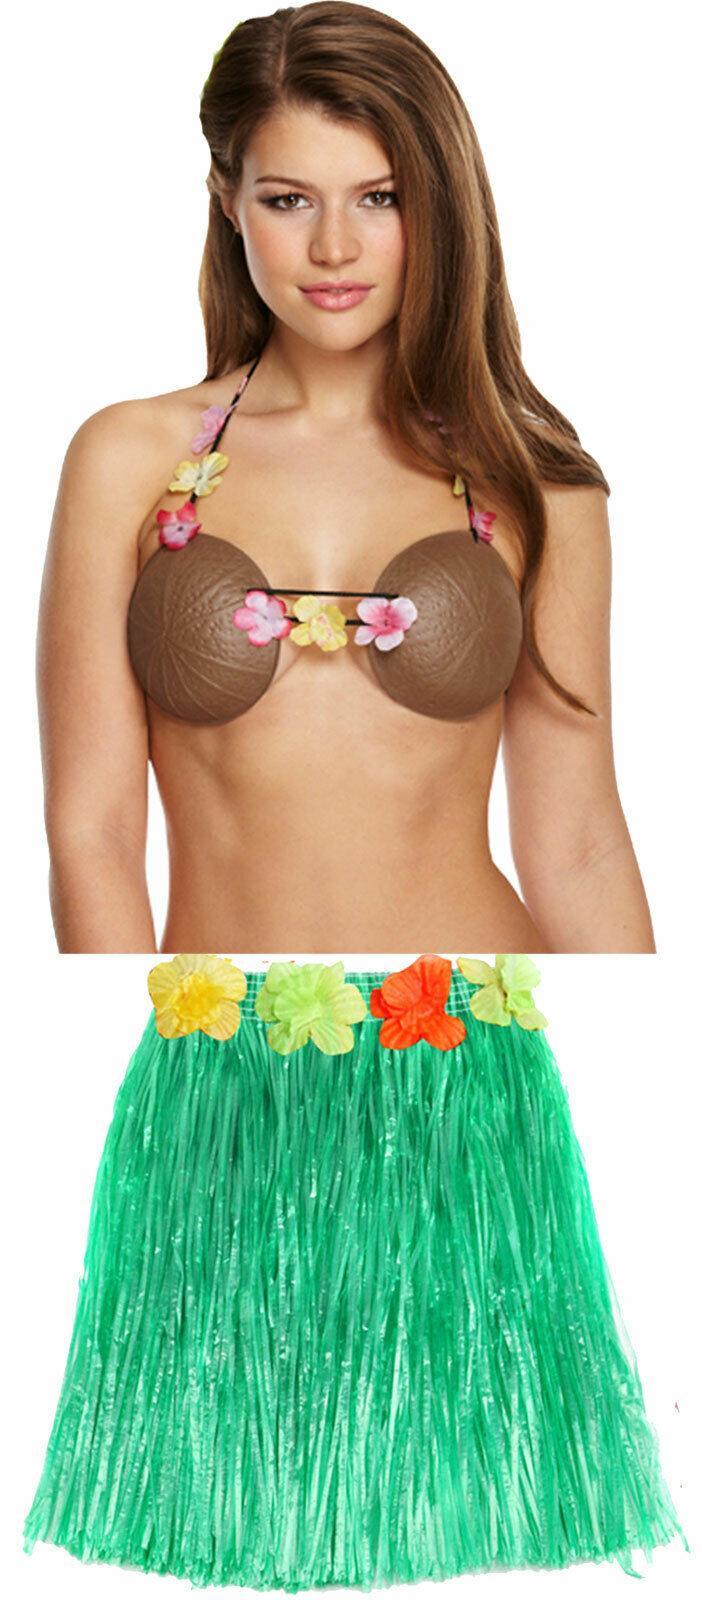 Ladies Girls 40 Cm Hula Grass Skirt Plastic Coconut Bra Hawaiian Beach Costume - Labreeze